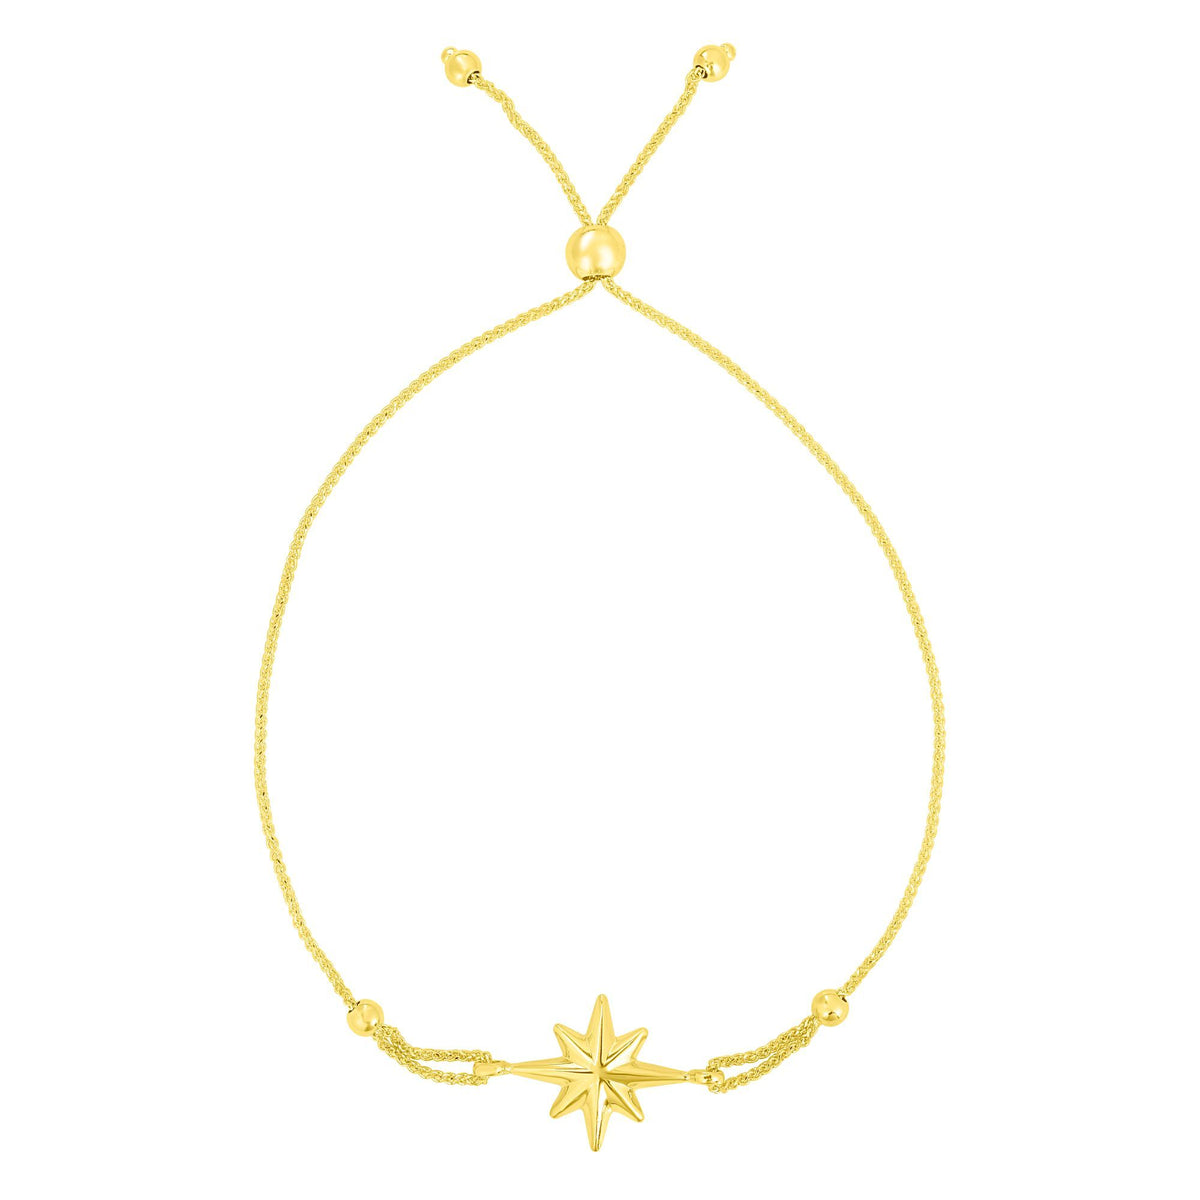 14k Yellow Gold Adjustable North Star Bolo Friendship Bracelet, 9.25"